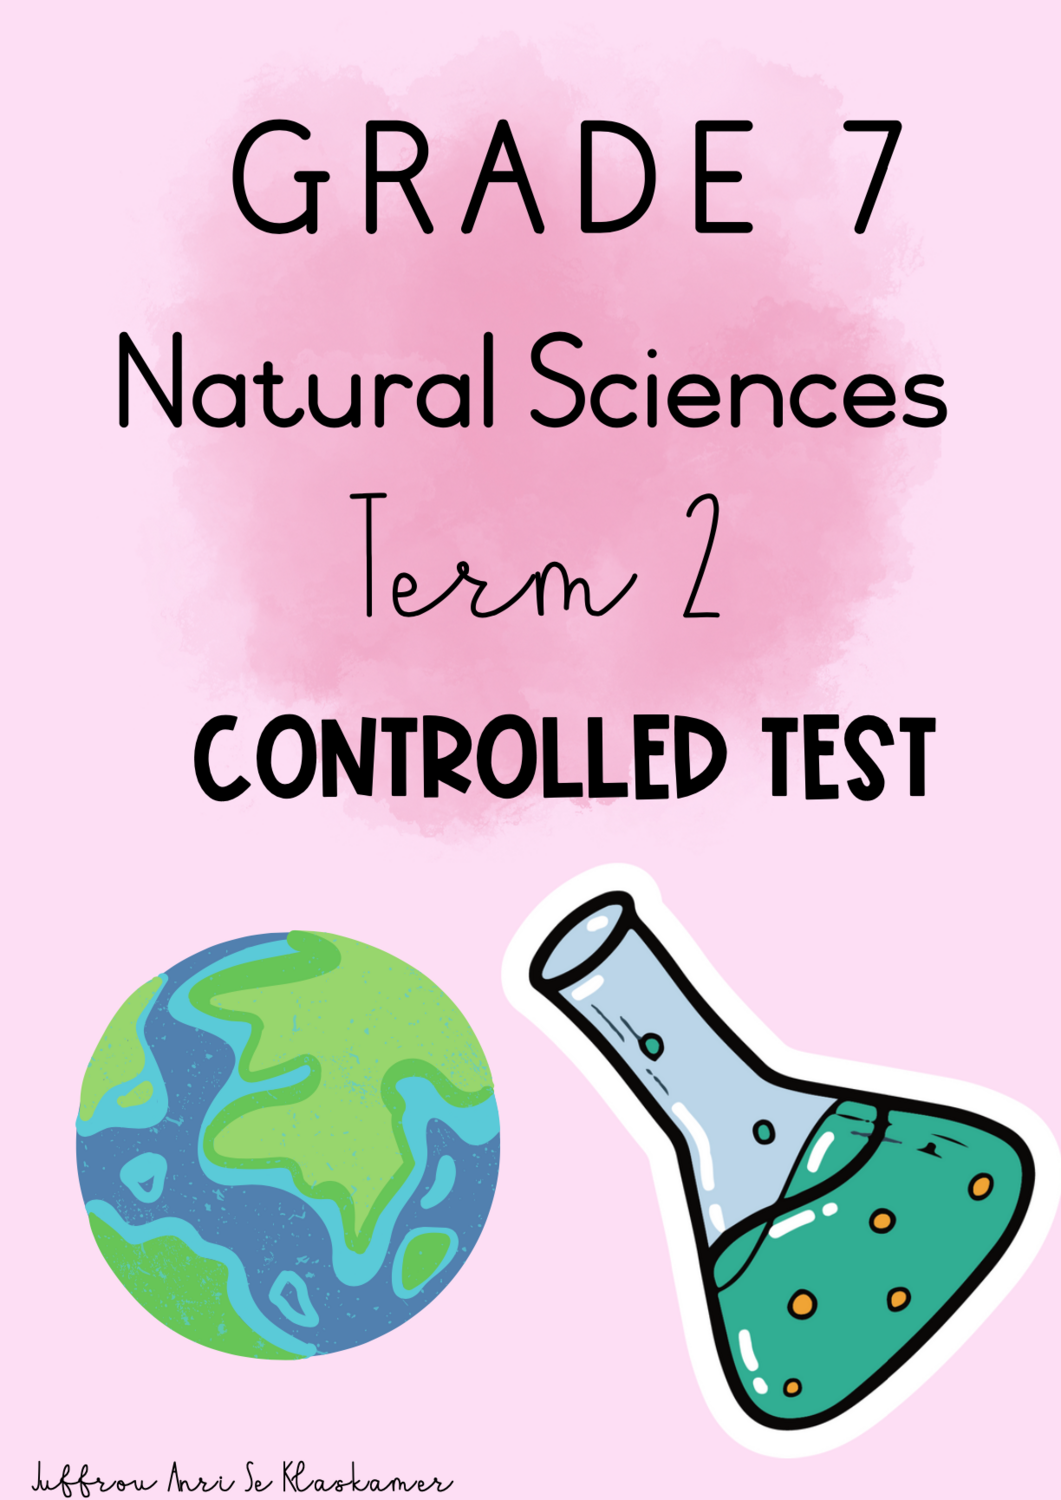 Grade 7 Natural Sciences term 2 test